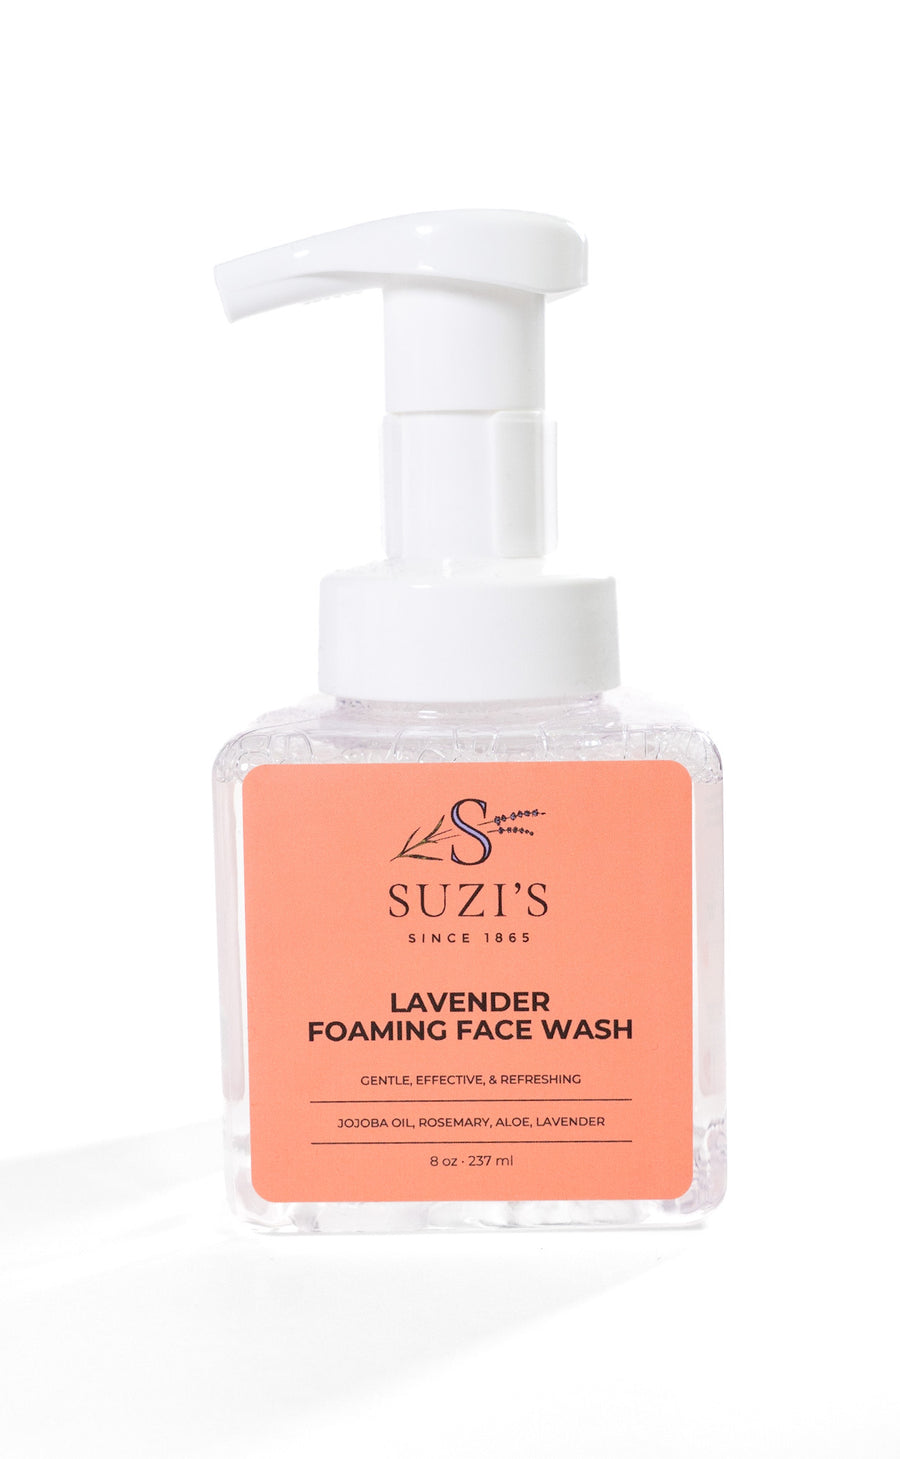 Foaming Face Wash by Suzi's Lavender